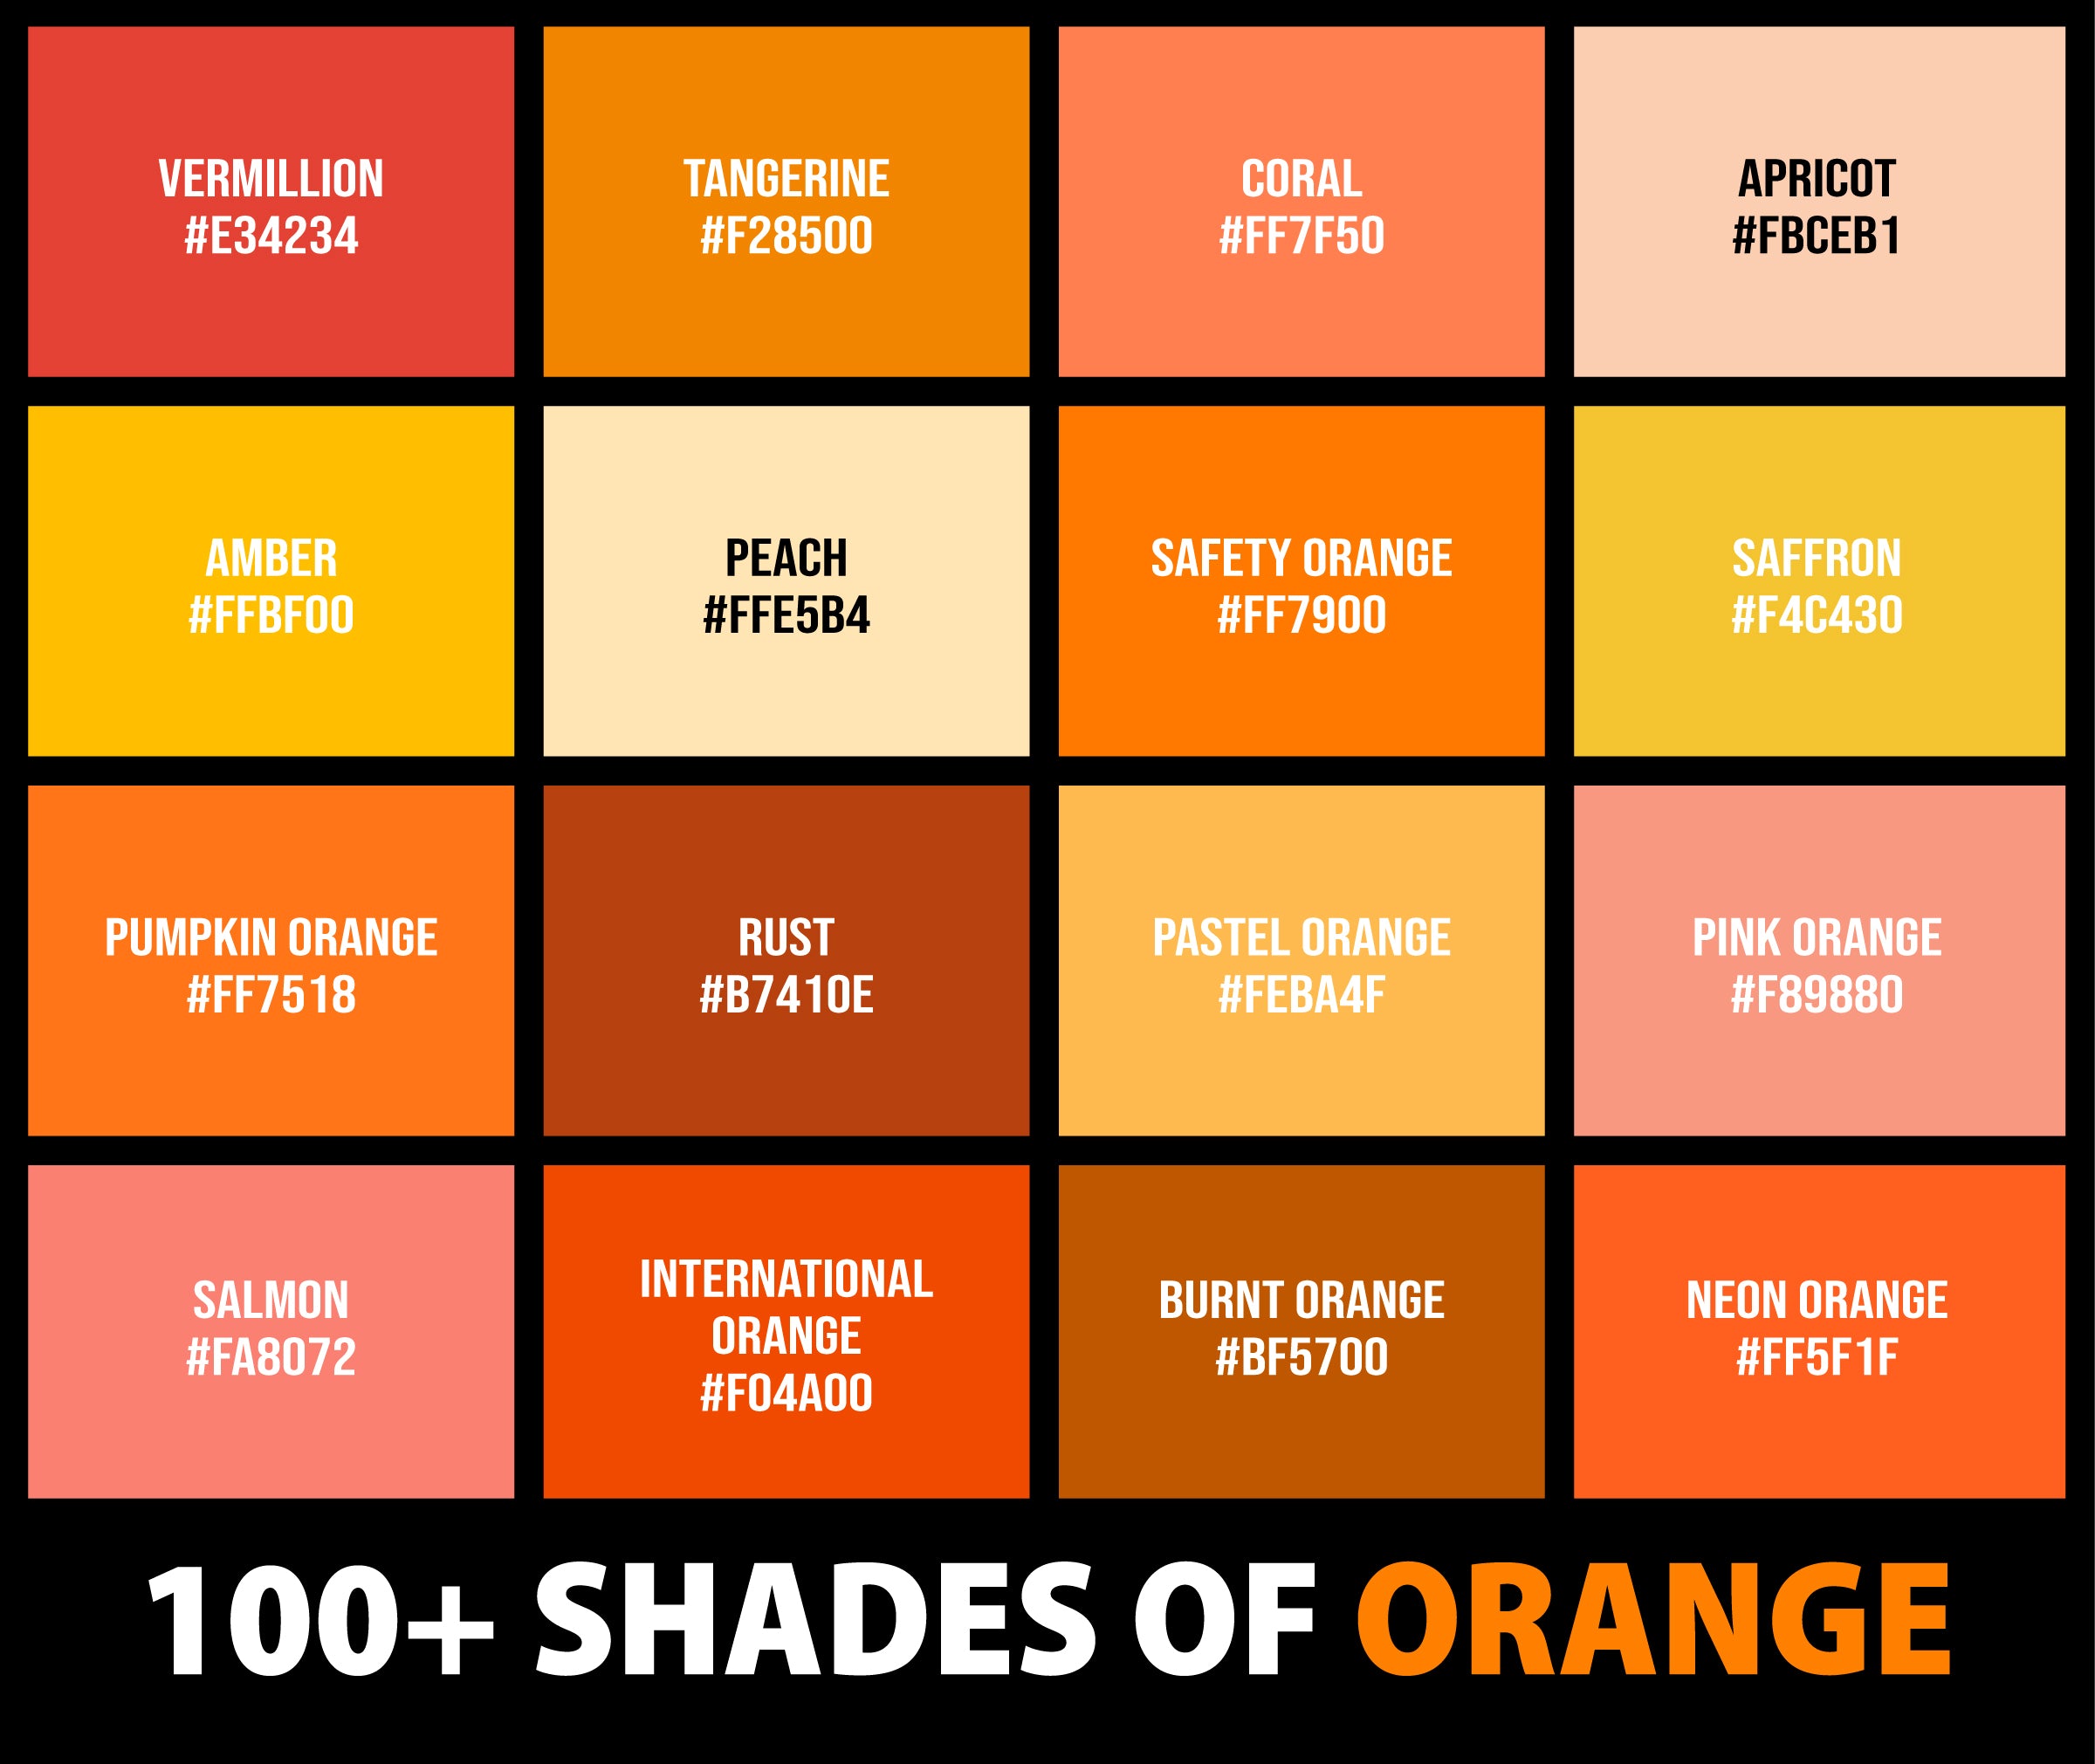 Shades of orange - Wikipedia